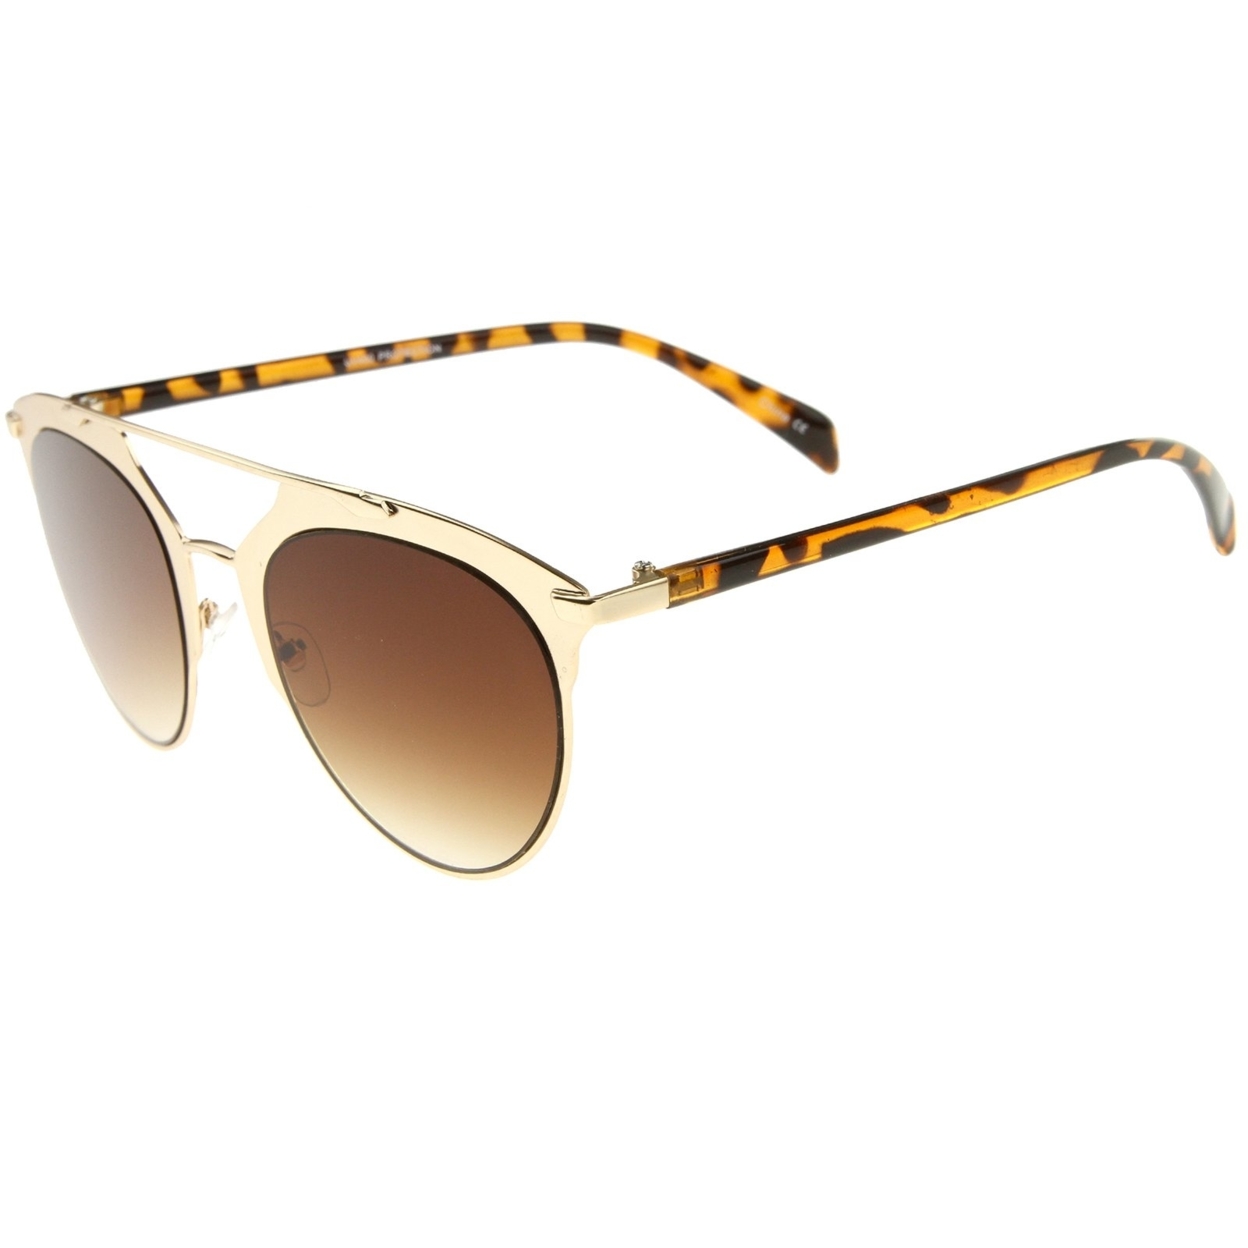 Modern Fashion Matte Metal Frame Double Bridge Pantos Aviator Sunglasses 55mm - Matte Silver-Black / Lavender